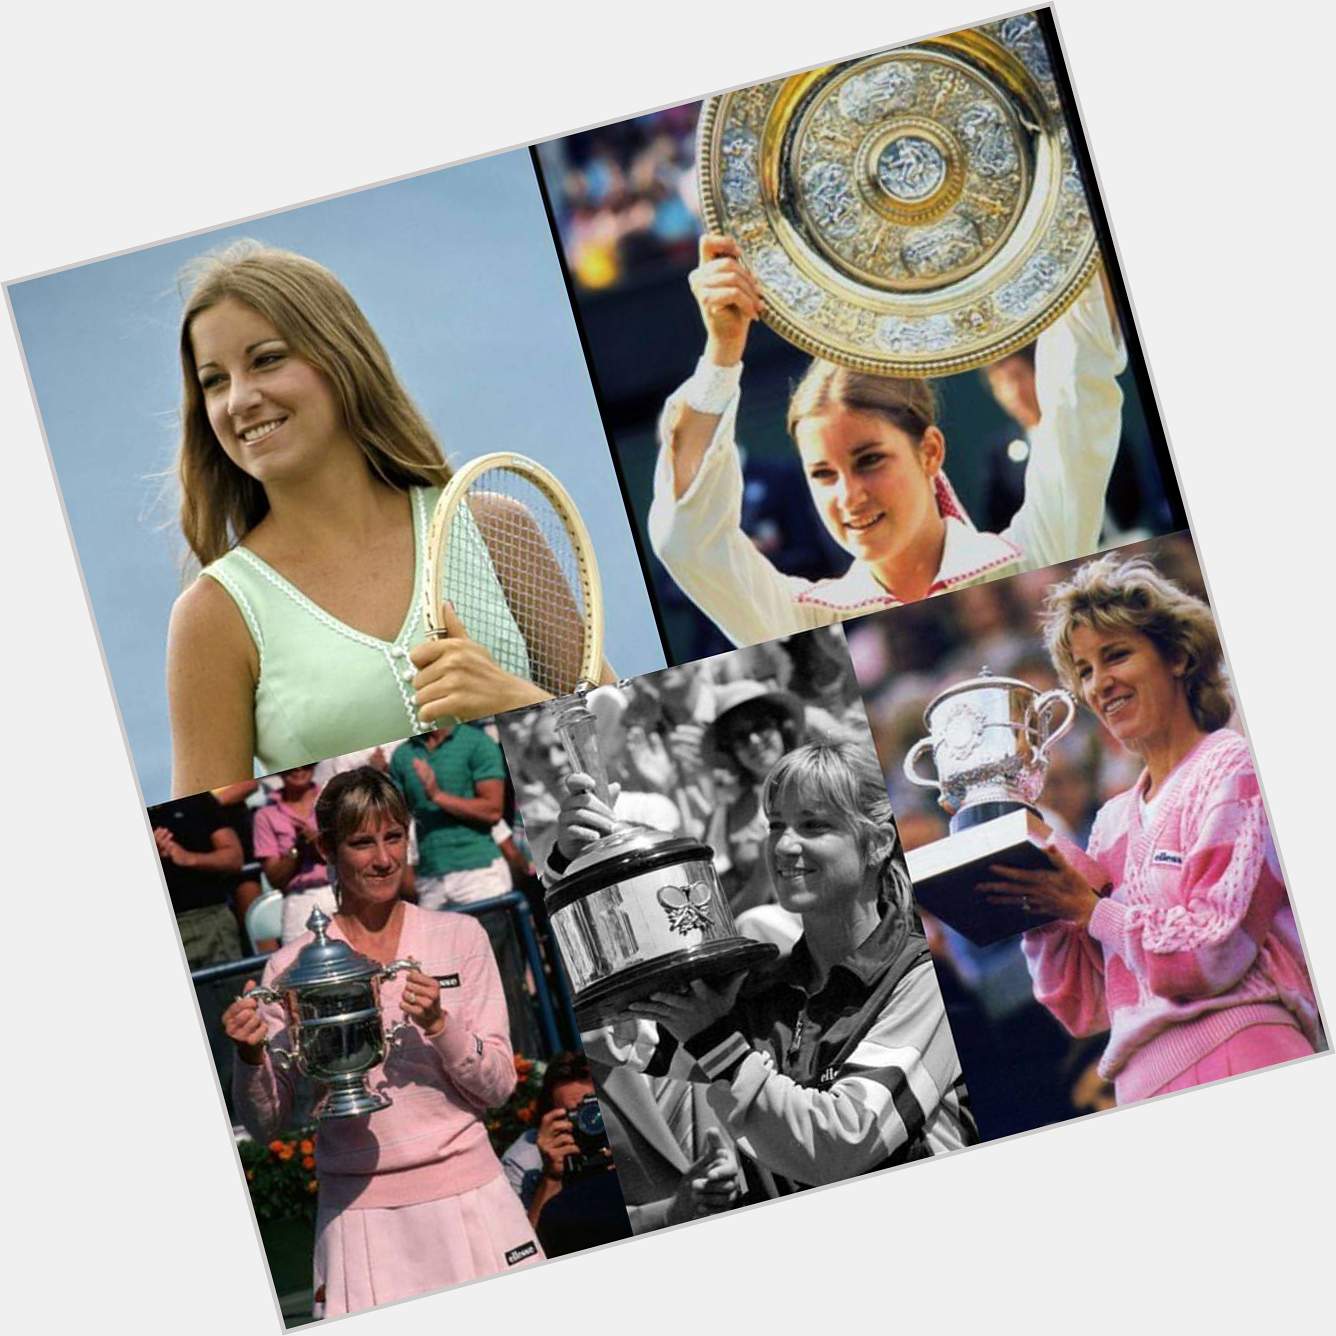  My first tenniswoman that I love when I began to follow tennis. Happy birthday Chris Evert !     